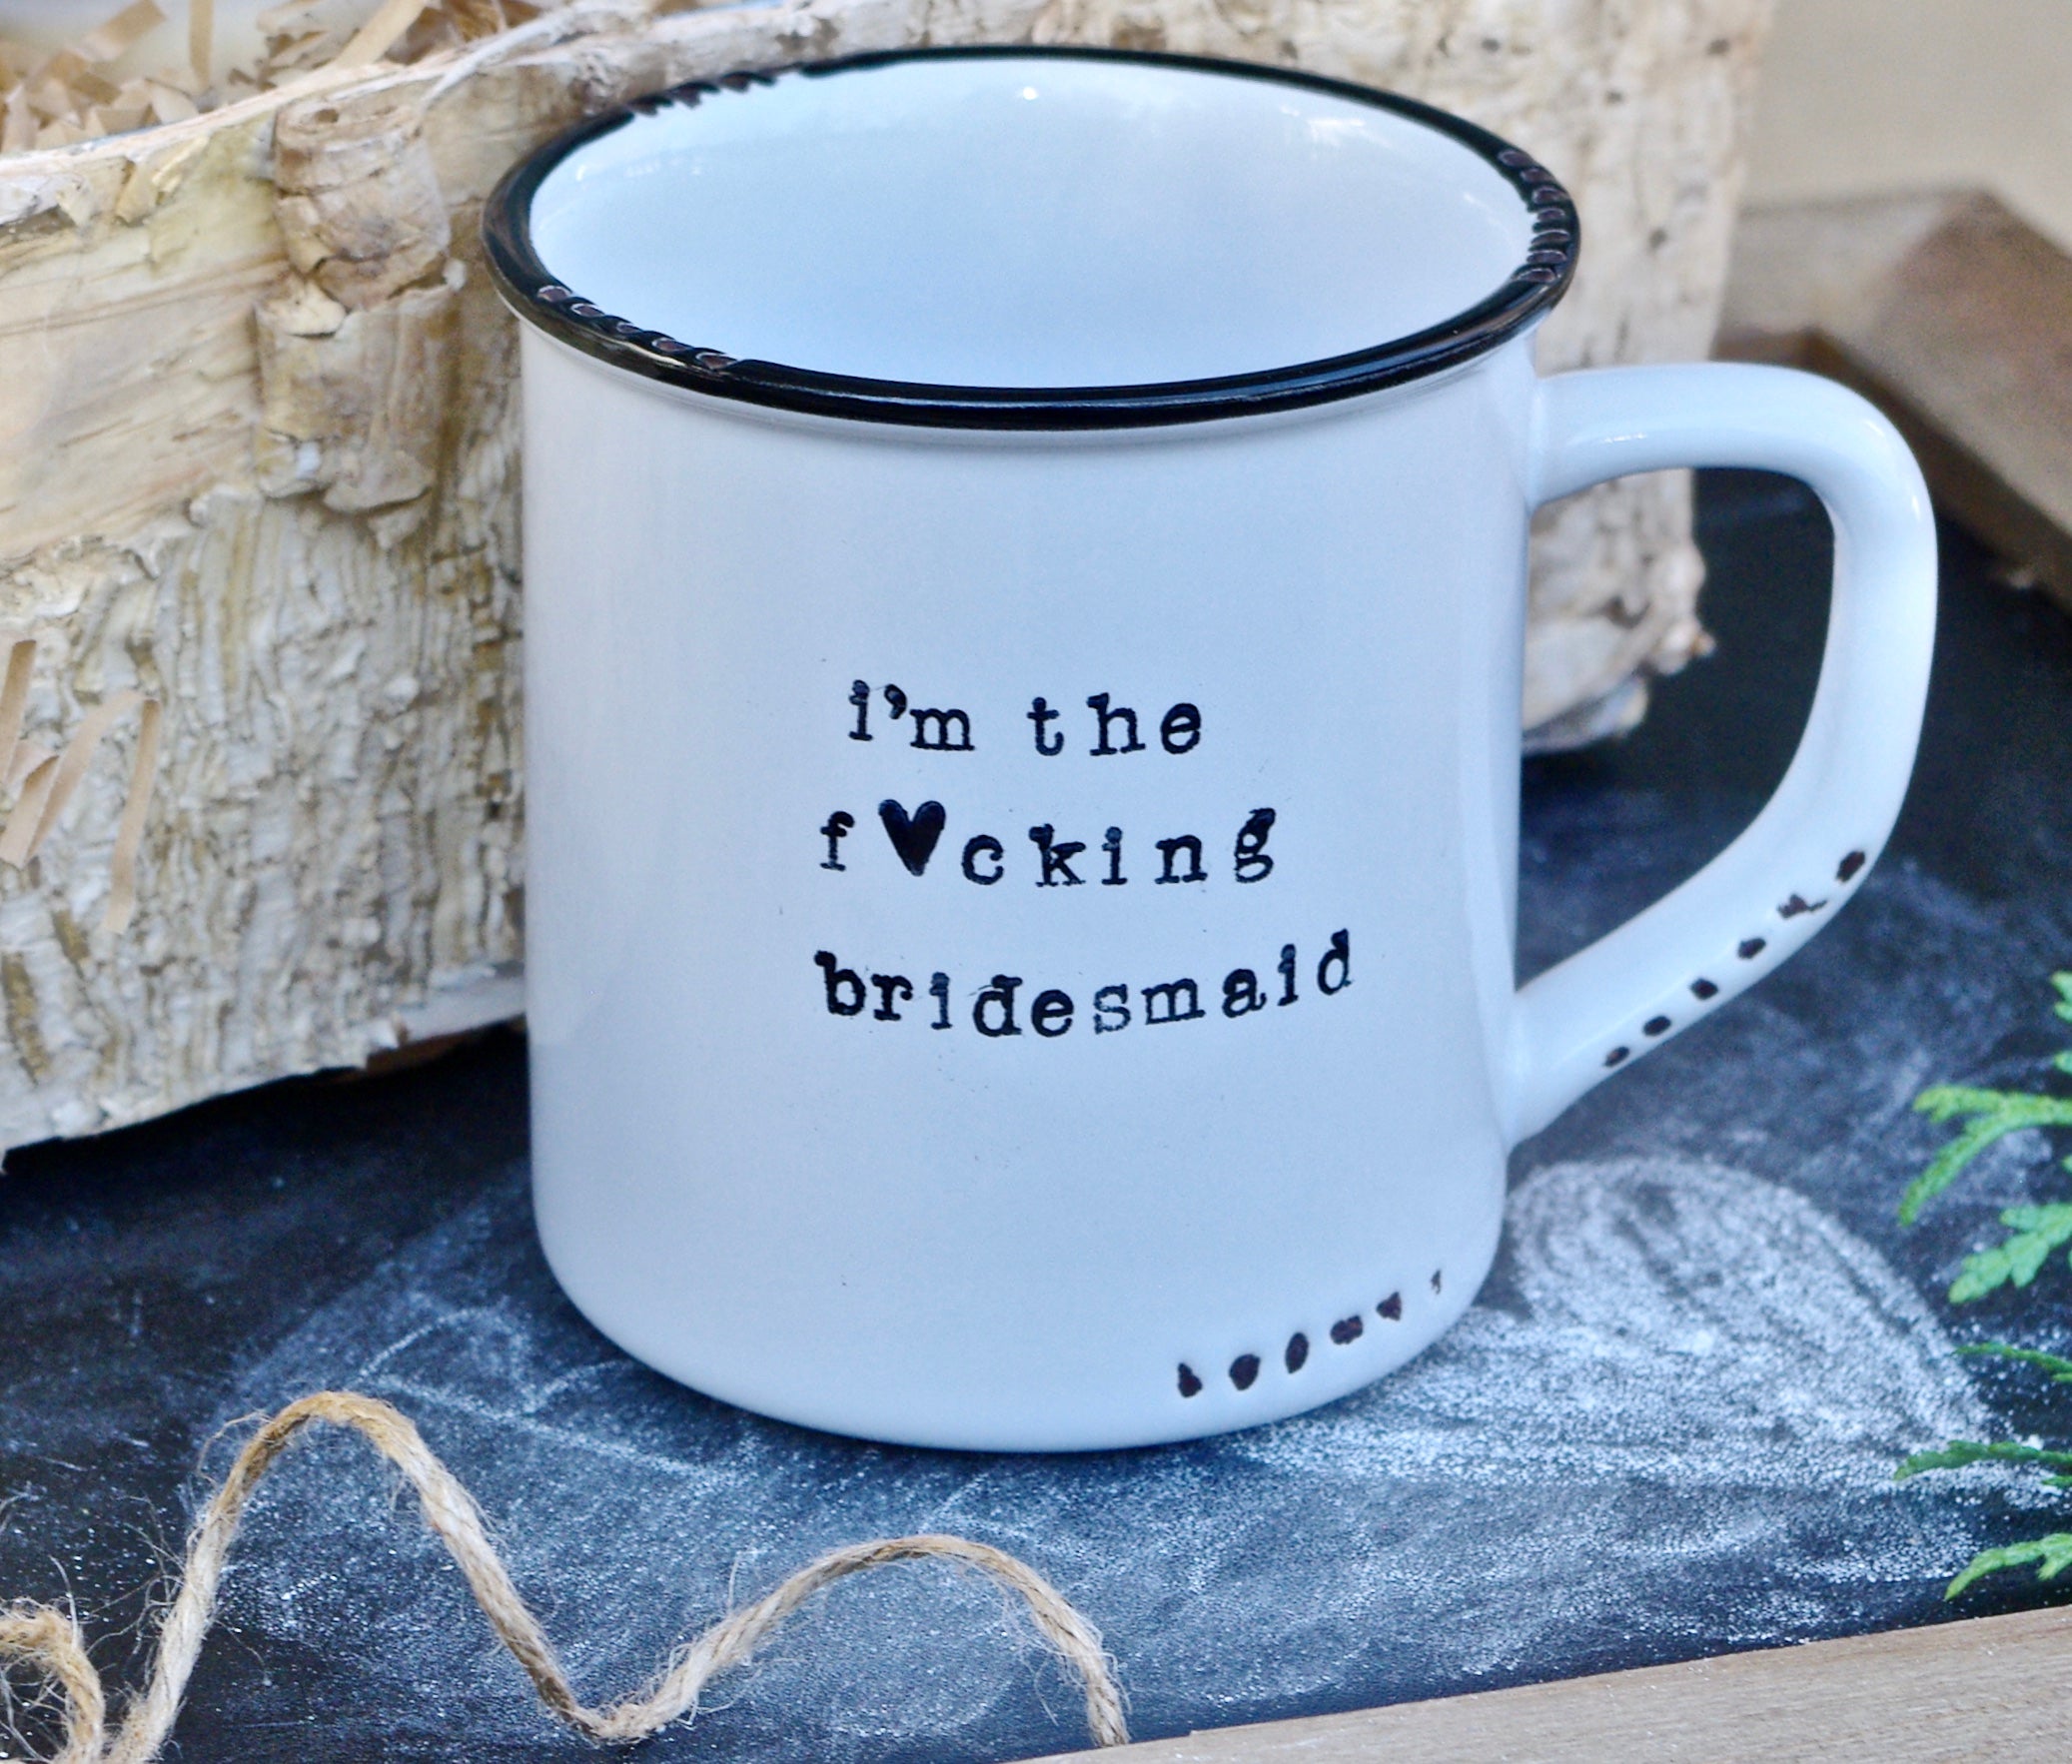 will you be my bridesmaid coffee mug will you be my bridesmaid gift basket toronto will you be my bridesmaid gift basket will you be my bridesmaid coffee mug